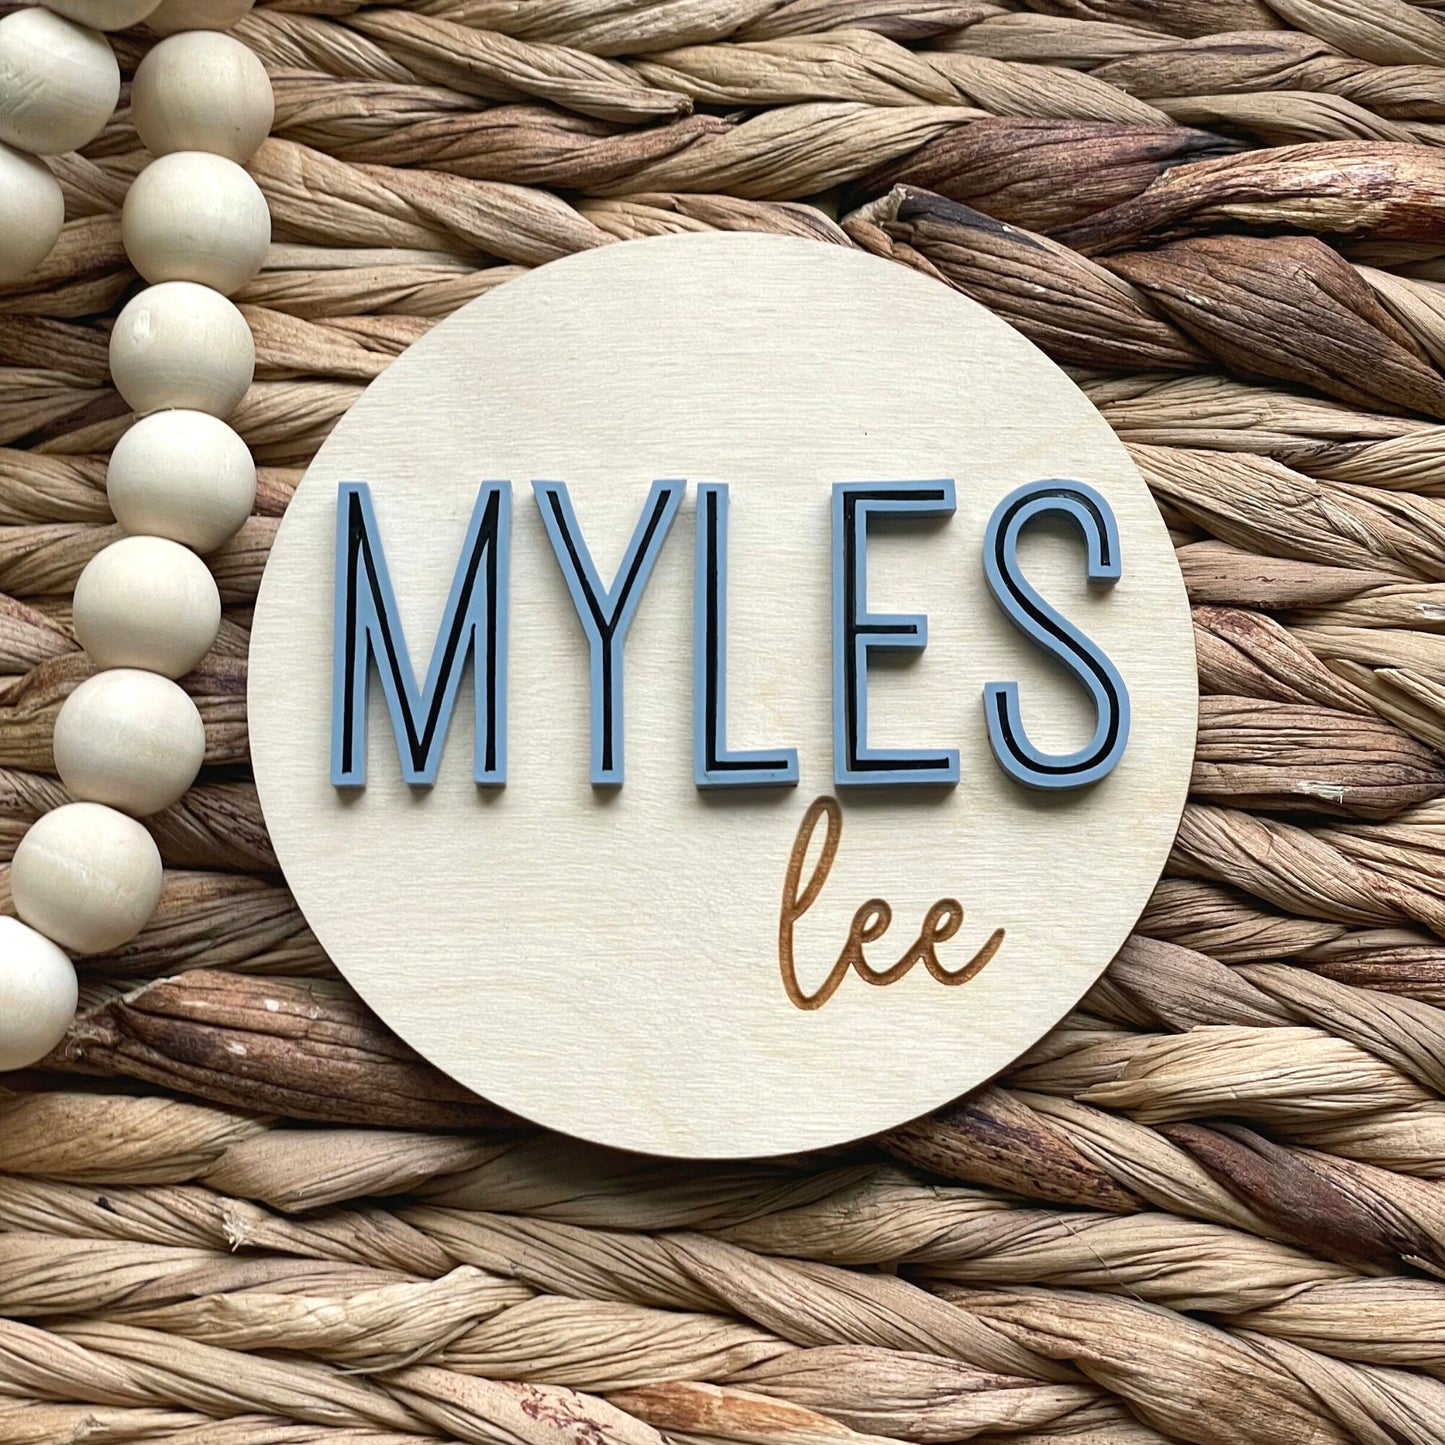 Myles Lee Baby Name Sign